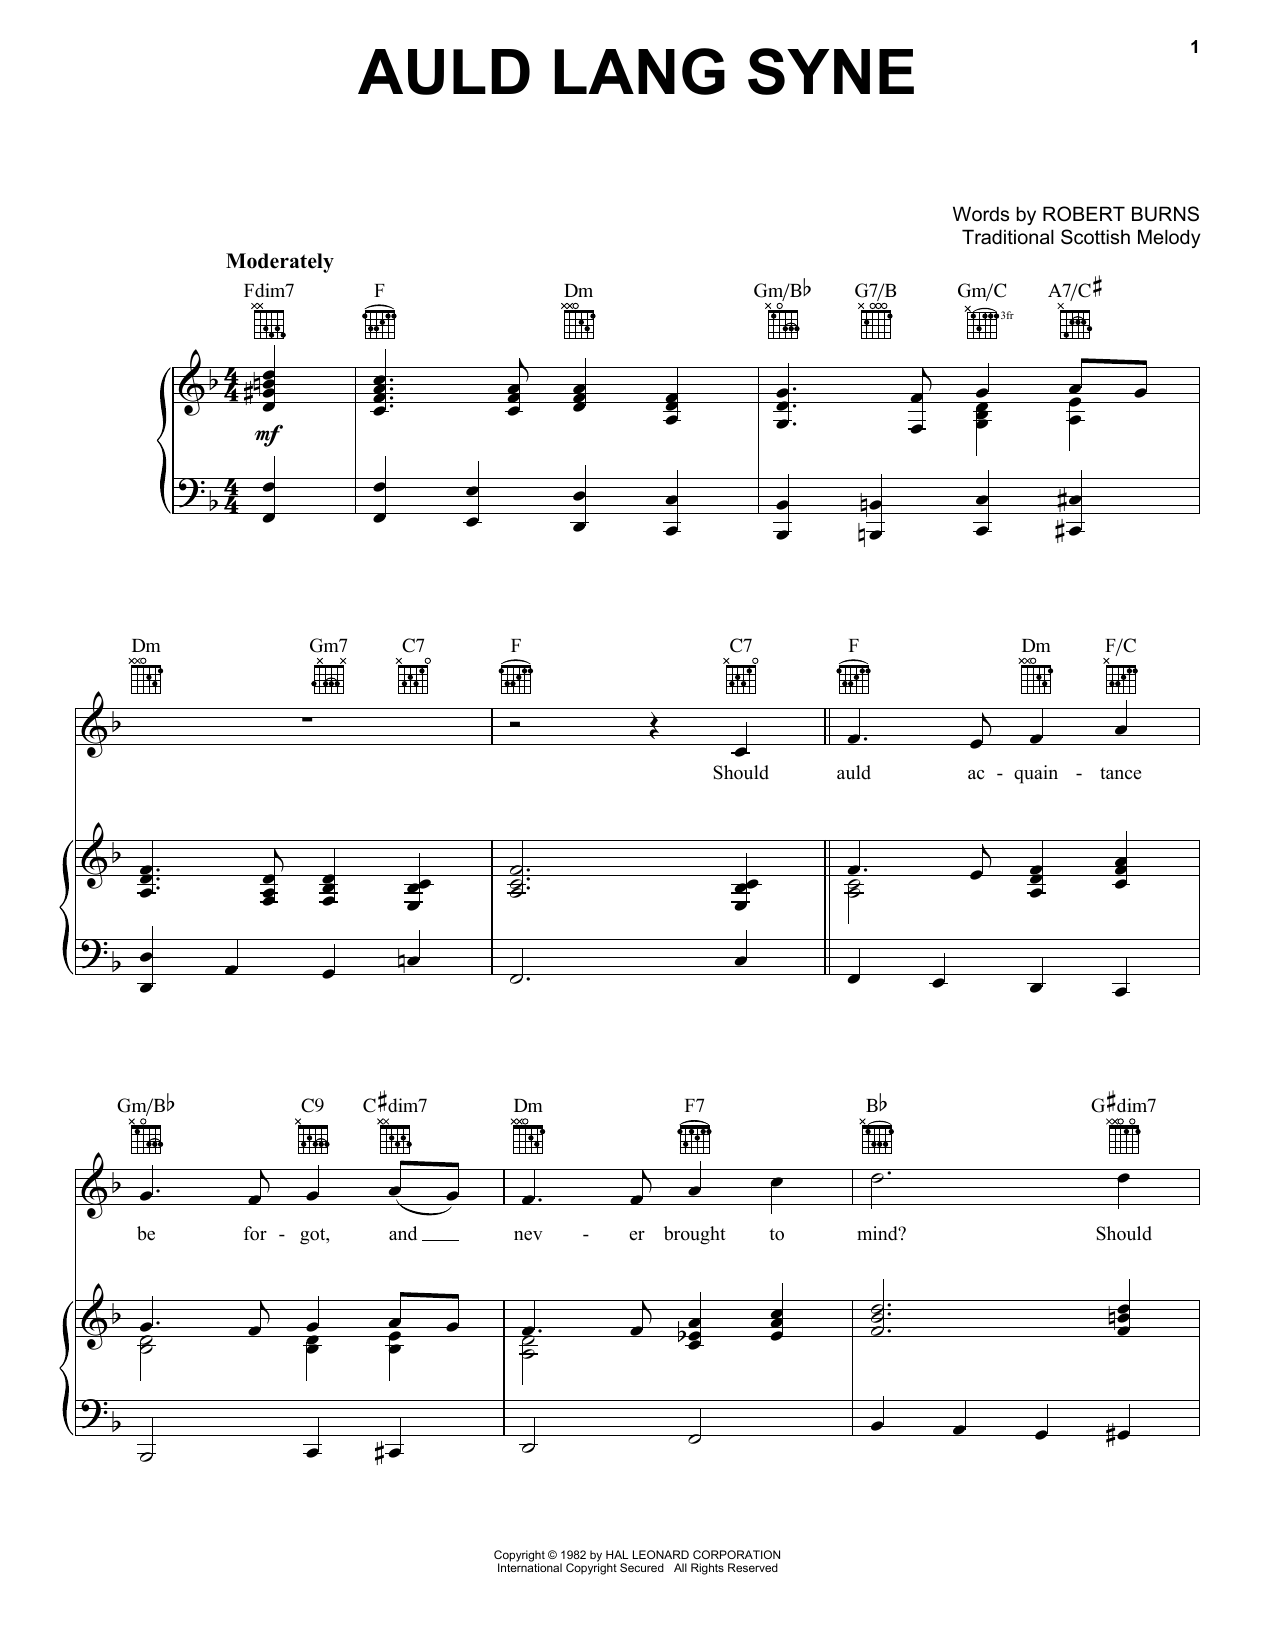 Robert Burns Auld Lang Syne Sheet Music Notes & Chords for Guitar Tab - Download or Print PDF